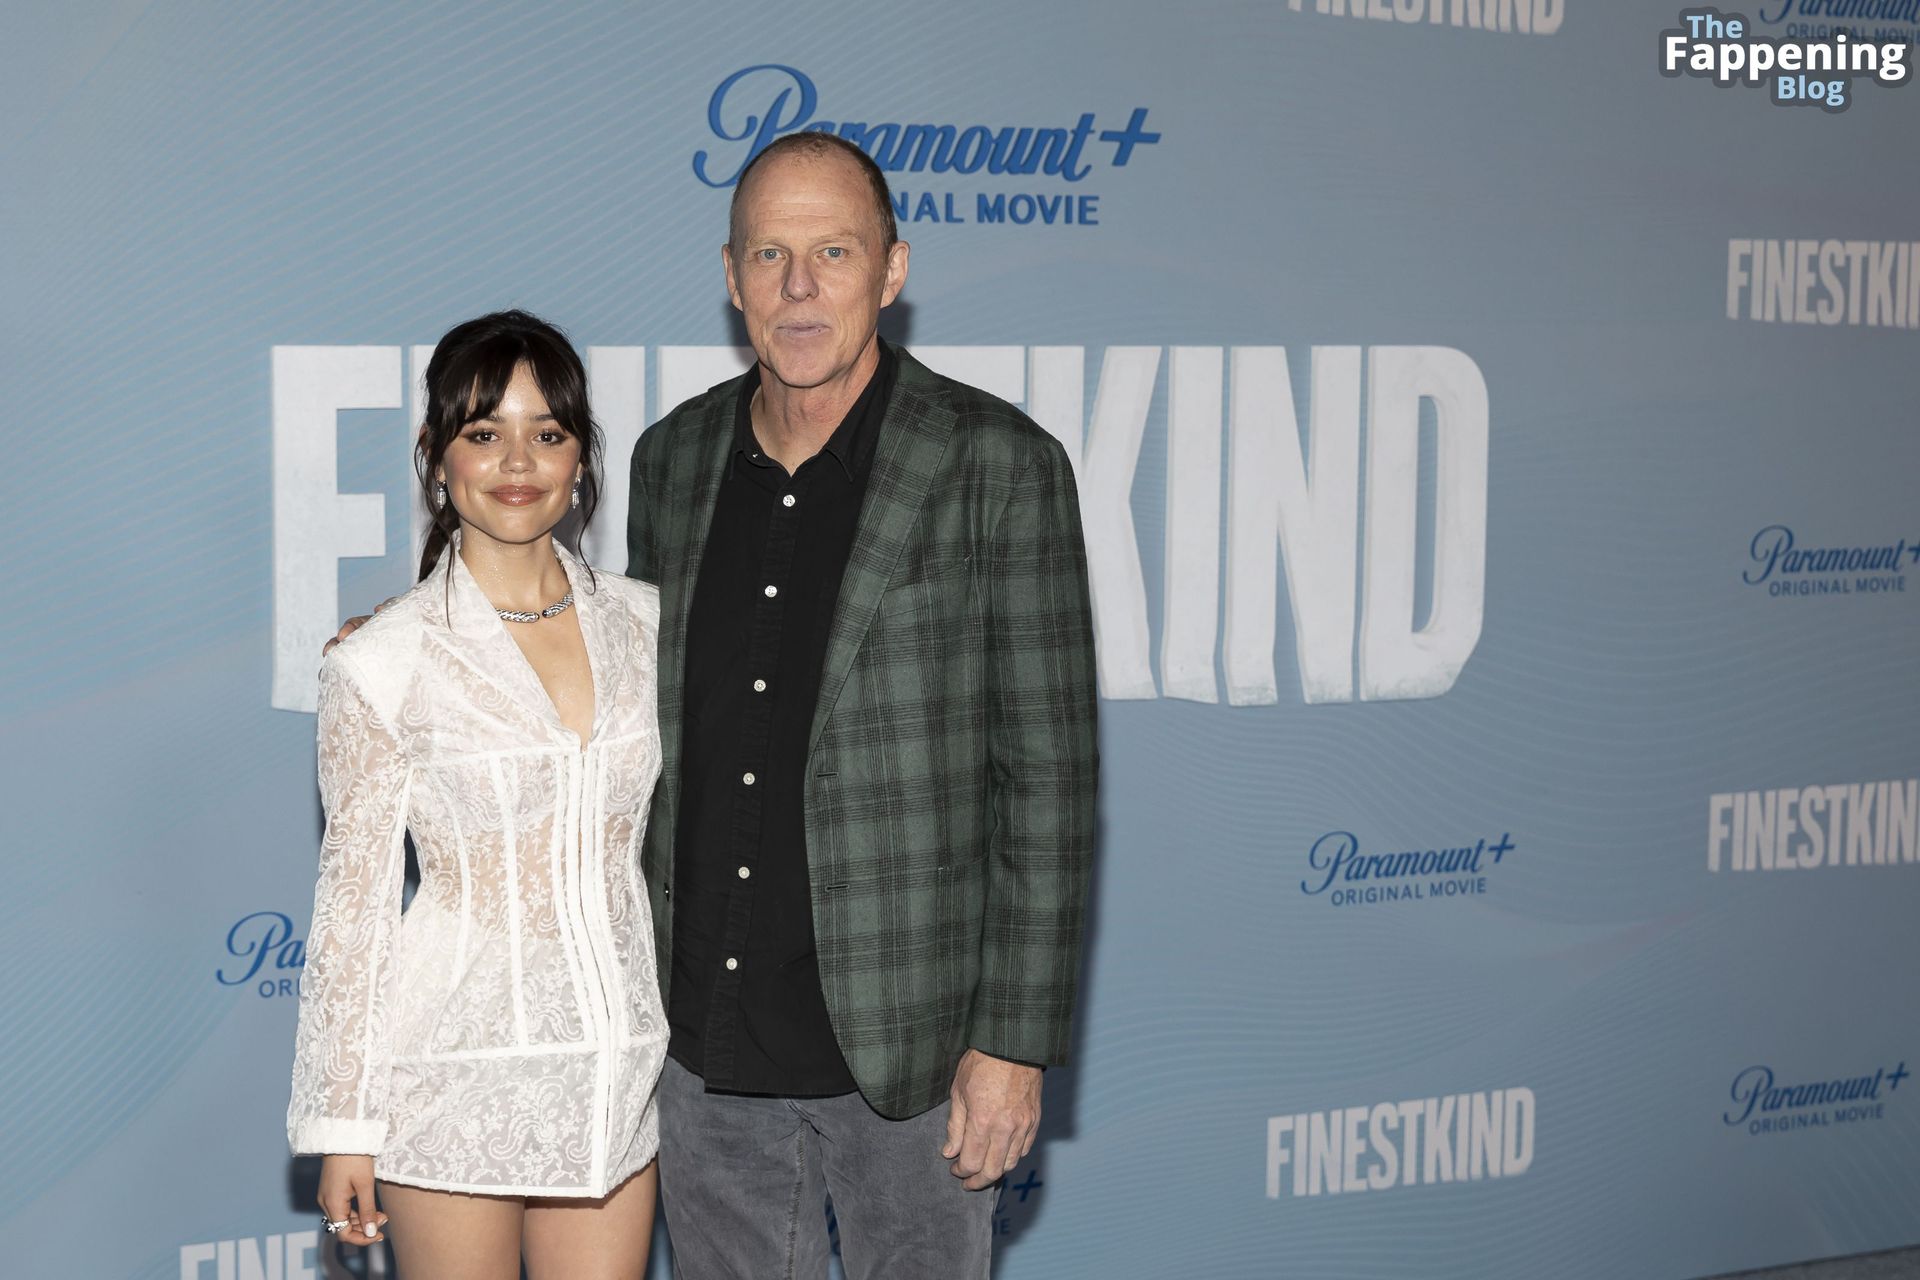 Jenna Ortega Looks Pretty in a Mini Dress at the “Finestkind” Premiere (45 Photos)